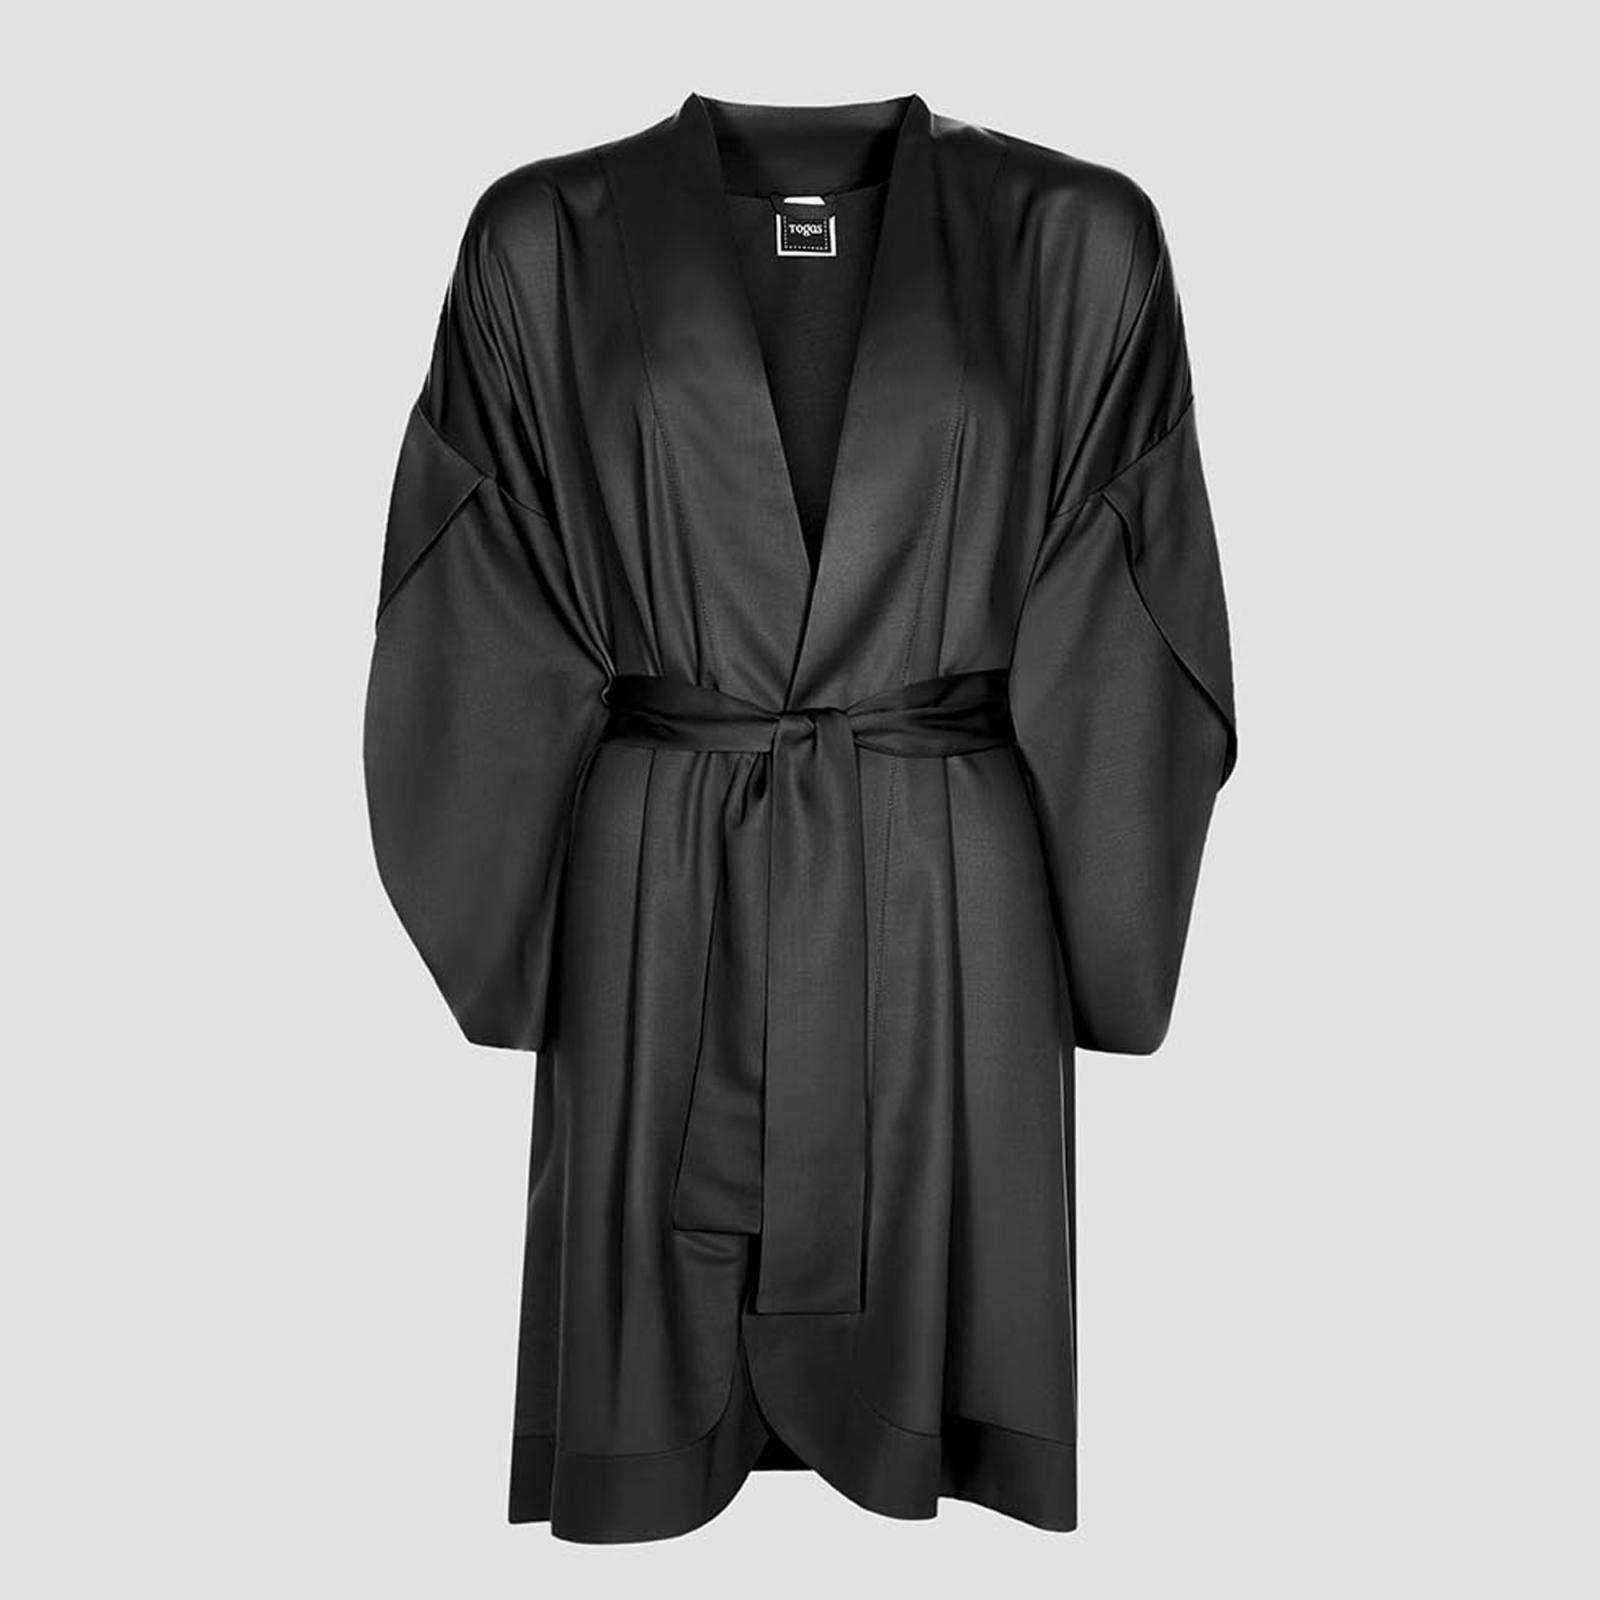 Халат-кимоно короткое Togas Наоми чёрное М (46) халат кимоно короткий togas наоми серый m 46